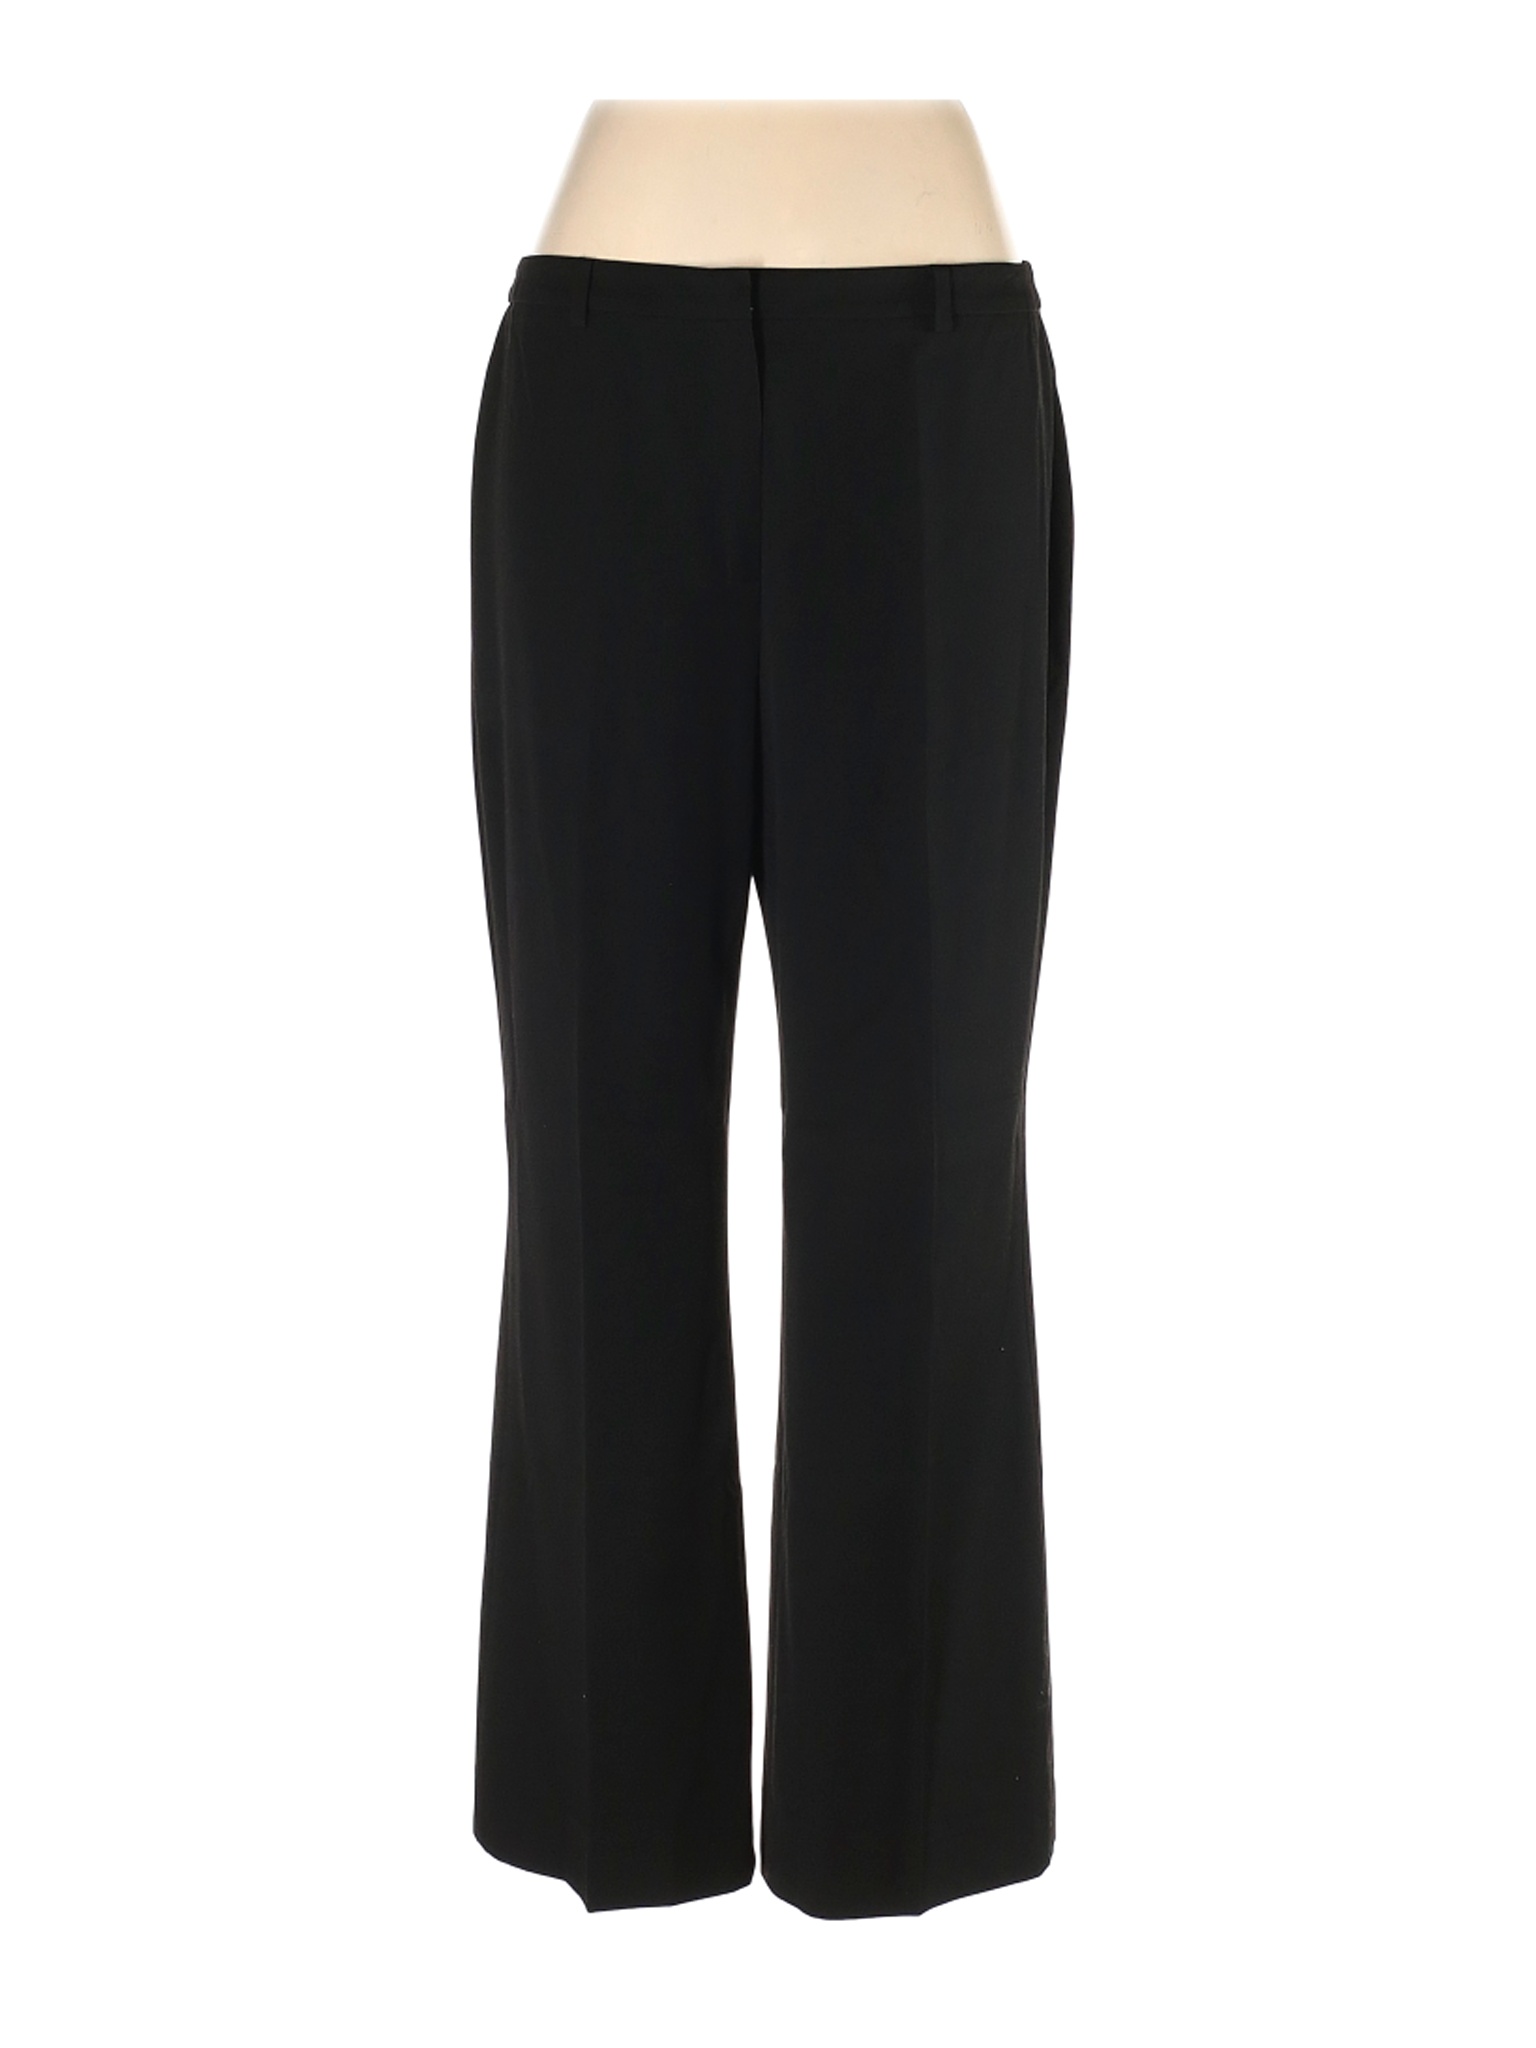 Jones New York Women Black Dress Pants 14 | eBay